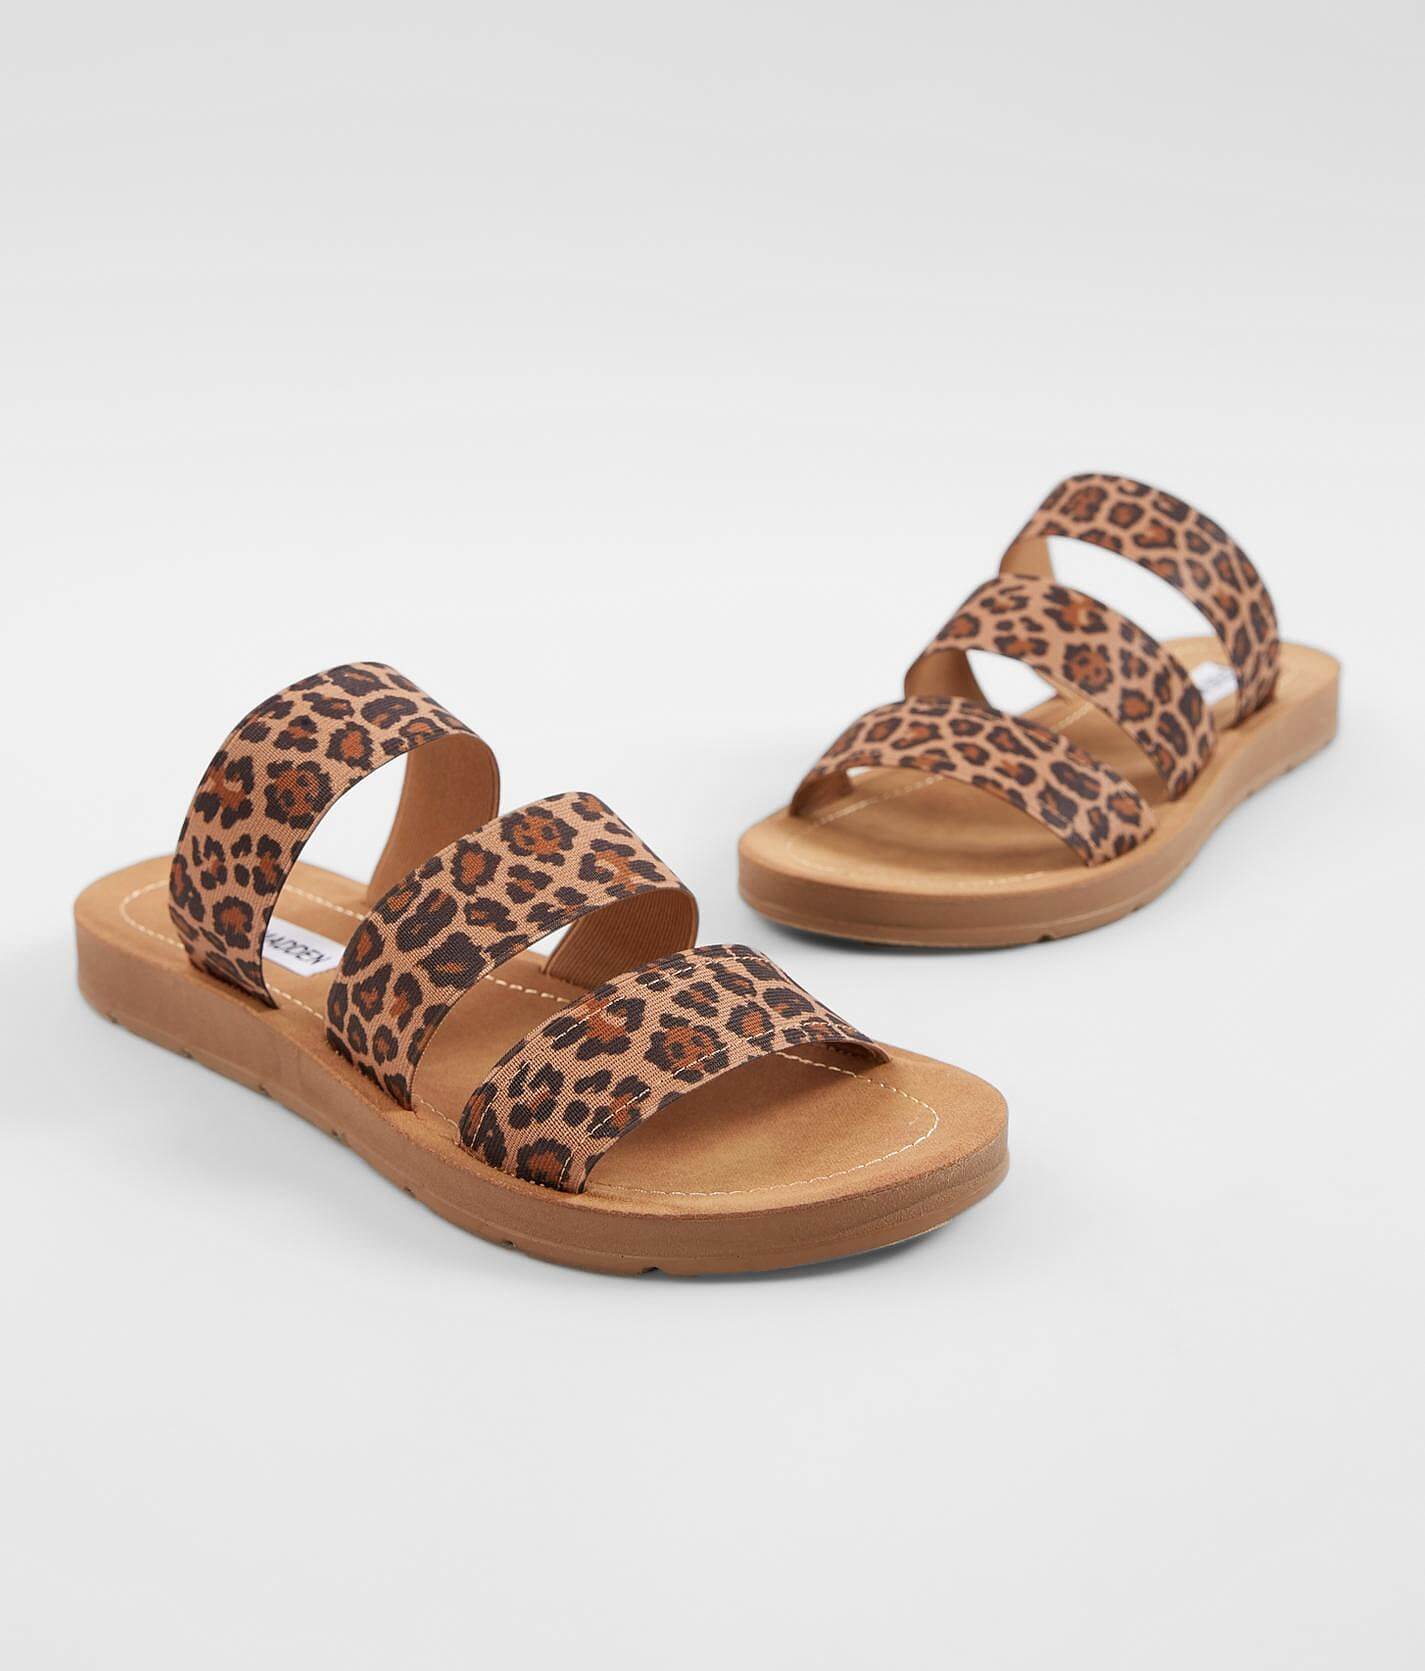 leopard sandals steve madden